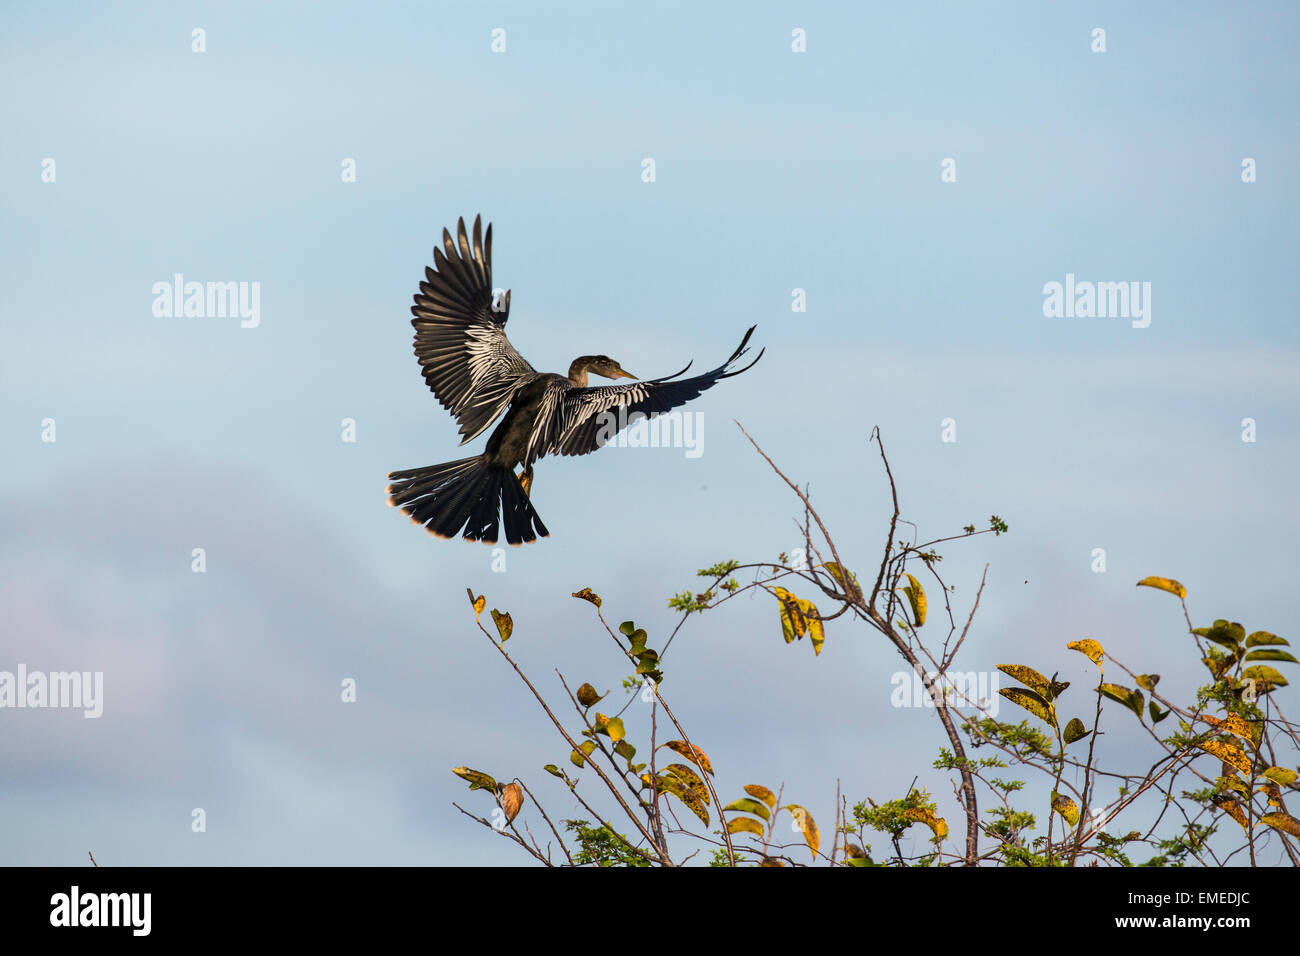 Anhinga d'Amérique ou de vol vert (Anhinga anhinga) dans le parc national des Everglades de Floride, USA. Banque D'Images